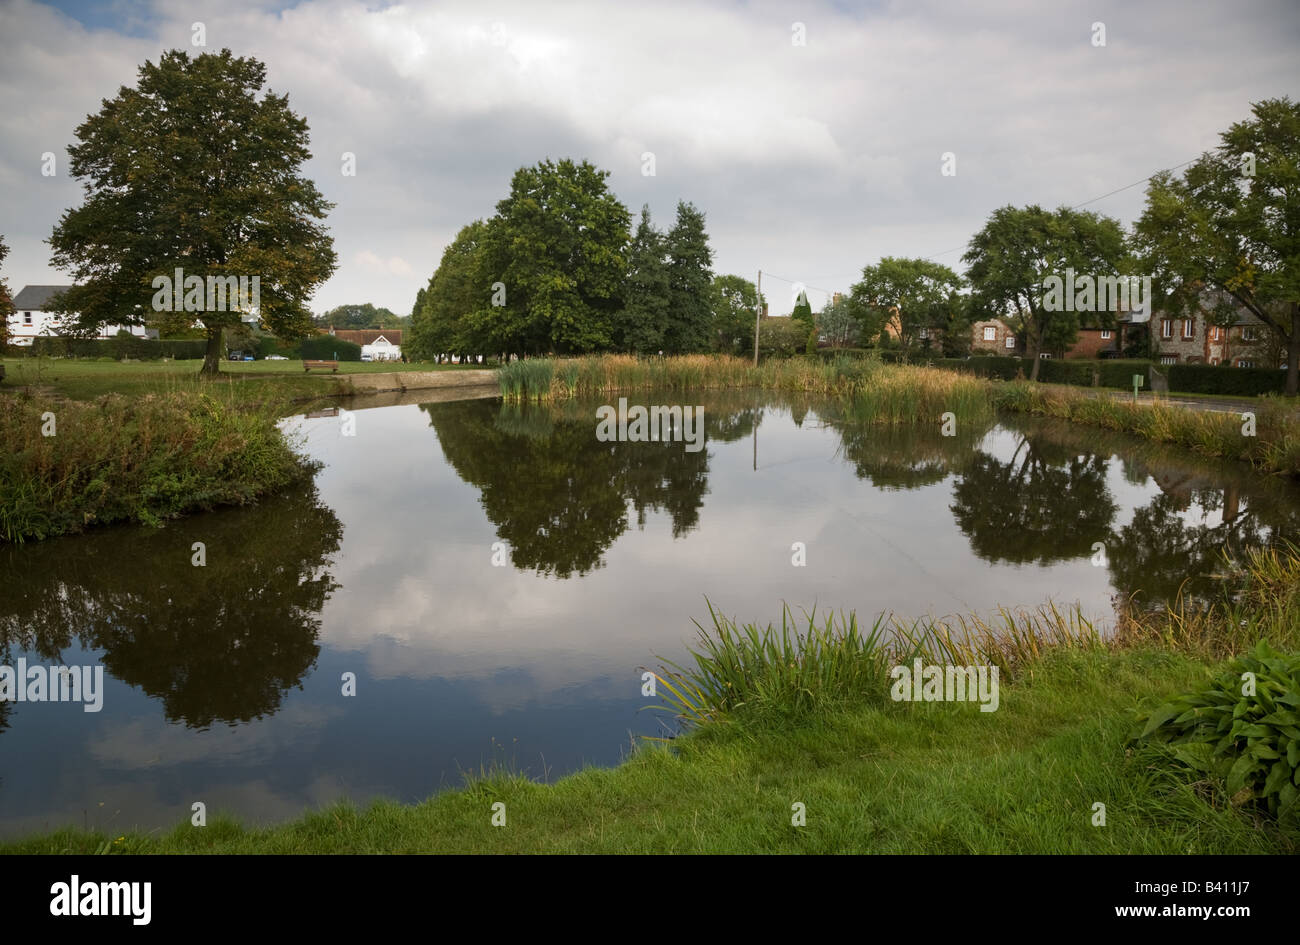 A typical English village pond on a village green in Penn, Bucks